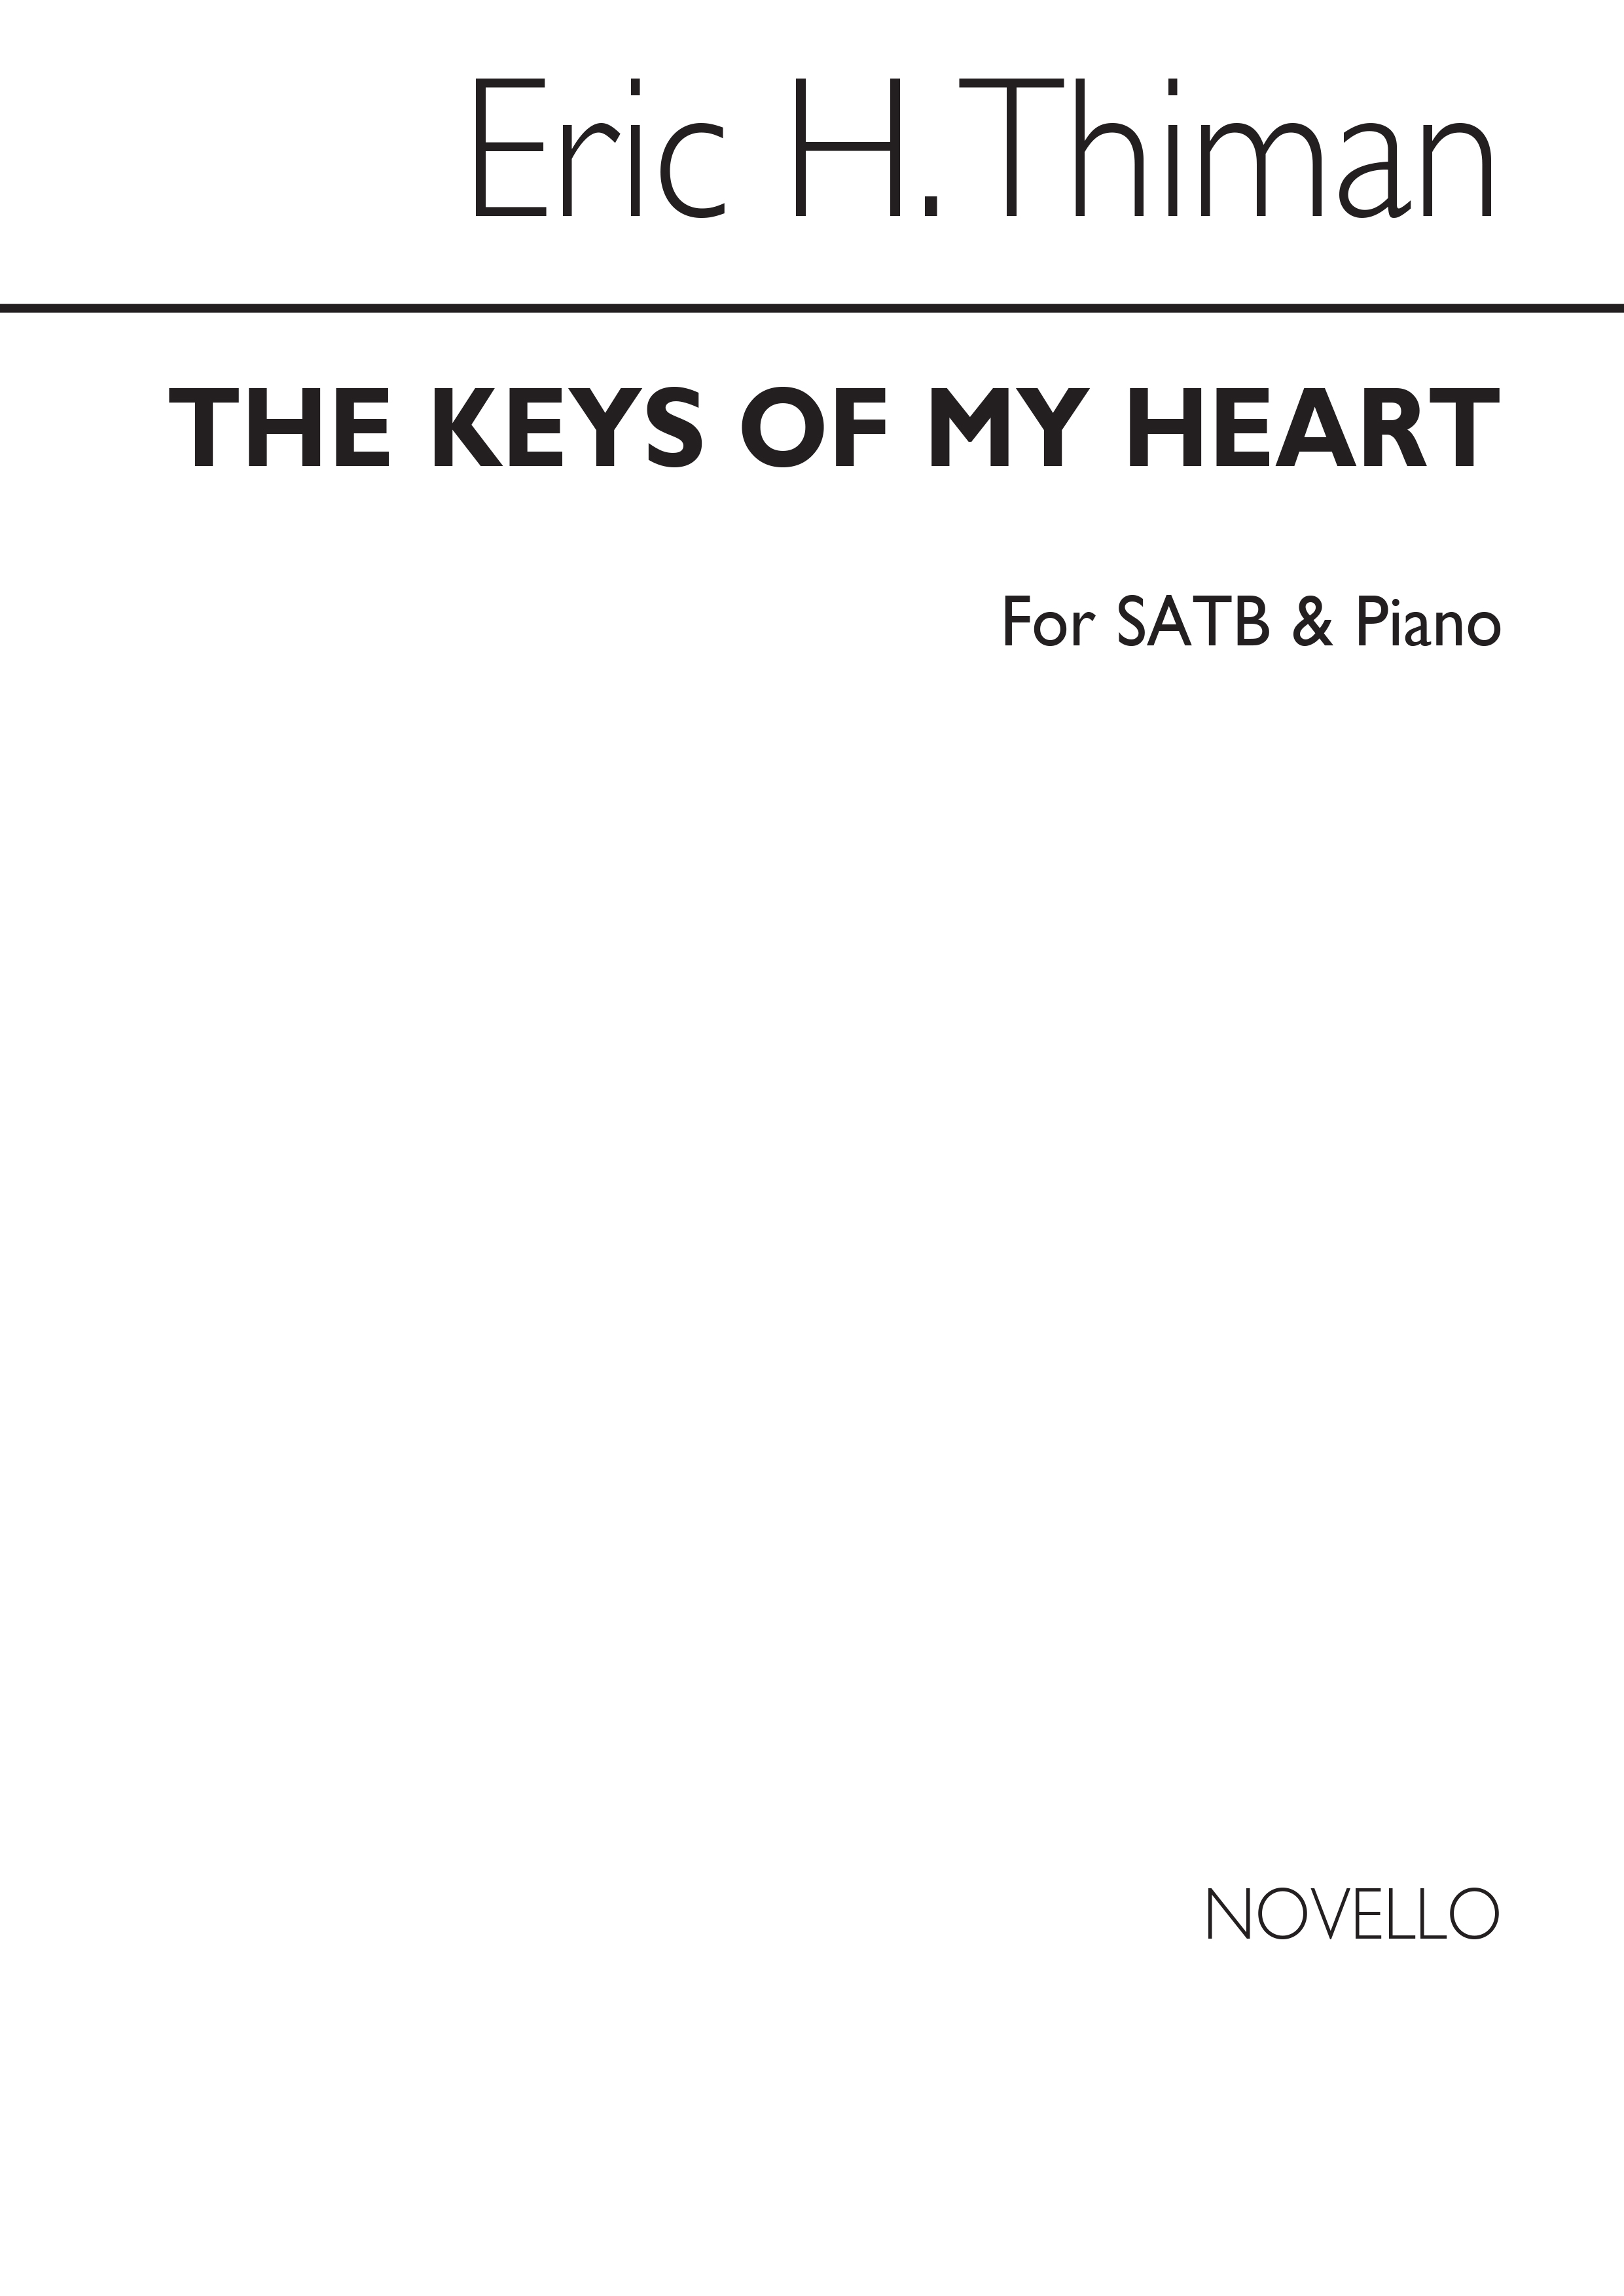 Thiman: The Keys Of My Heart SATB